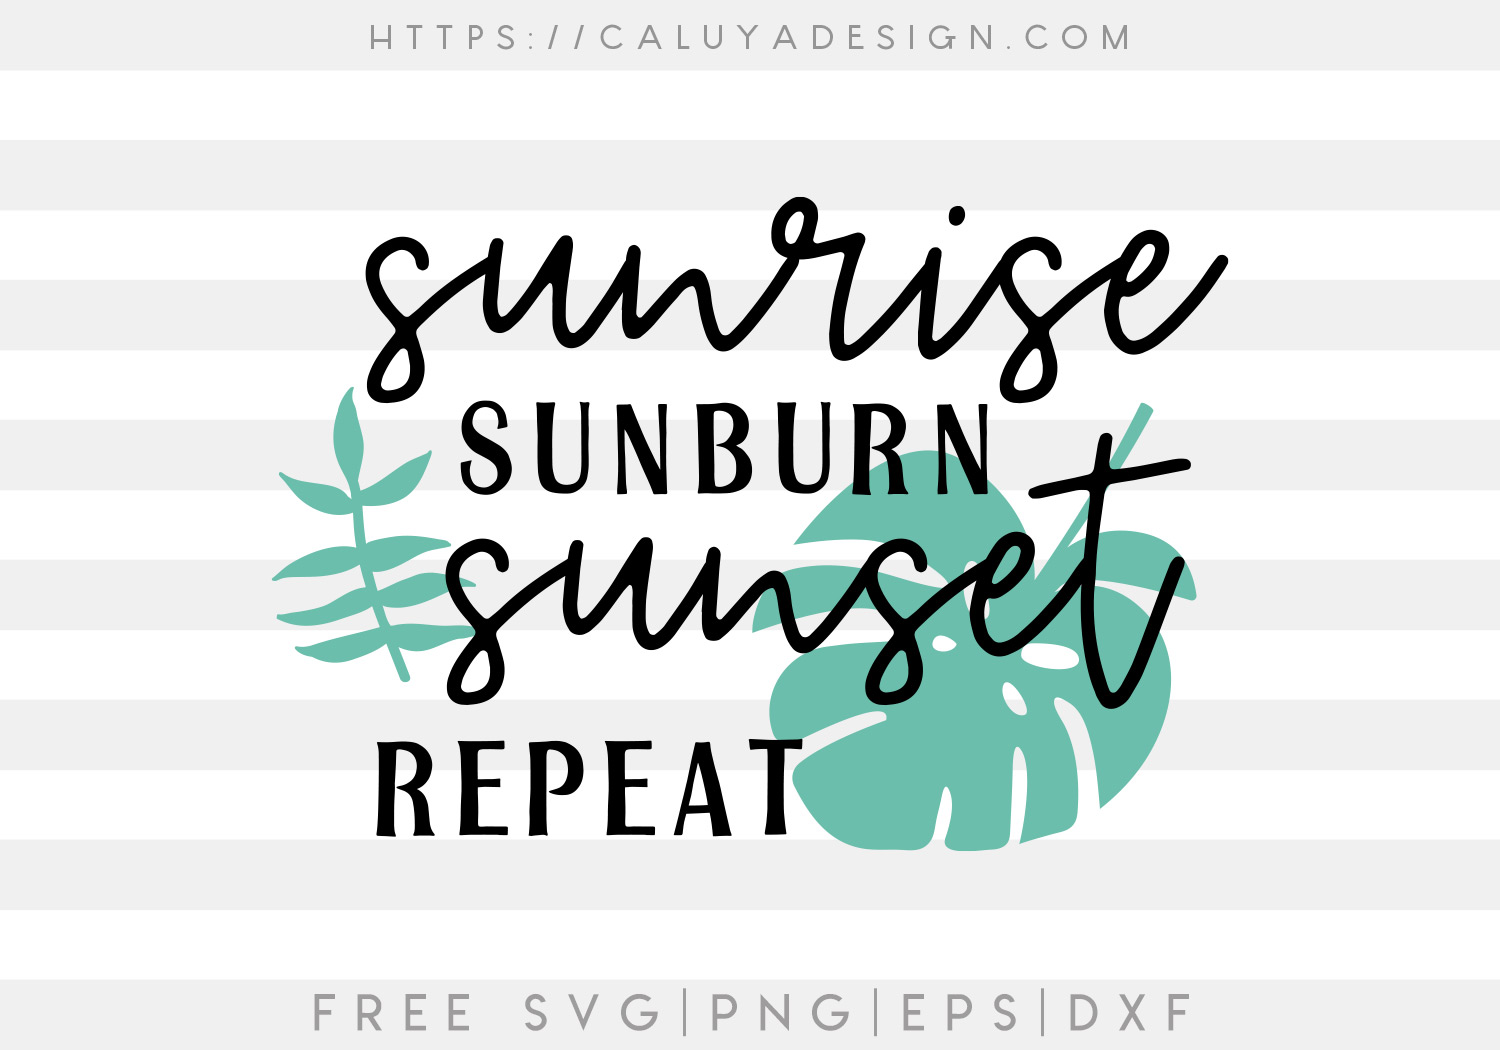 Free Sunrise Sunburn Sunset Repeat SVG Cut File